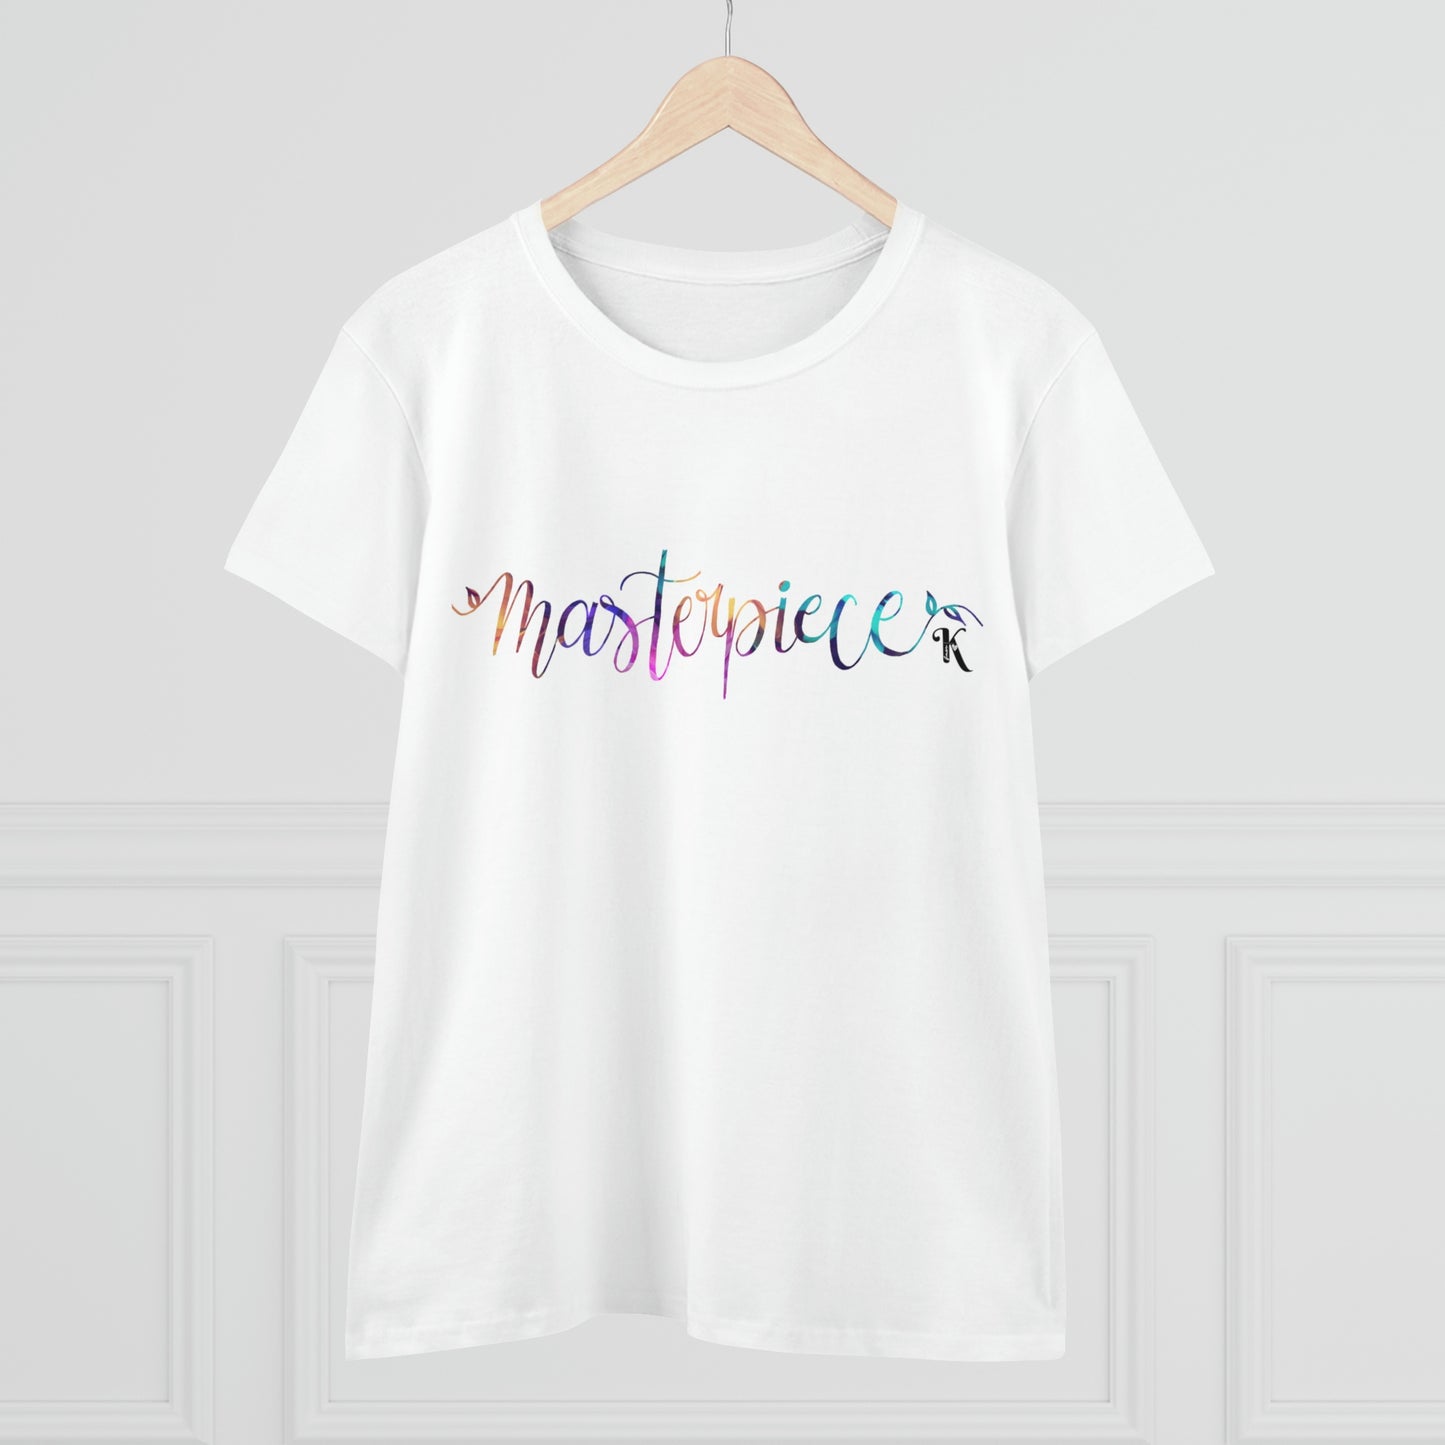 Masterpiece e2.10 > Women's Midweight Cotton Tee / Camiseta de algodón para mujer (Colorful)